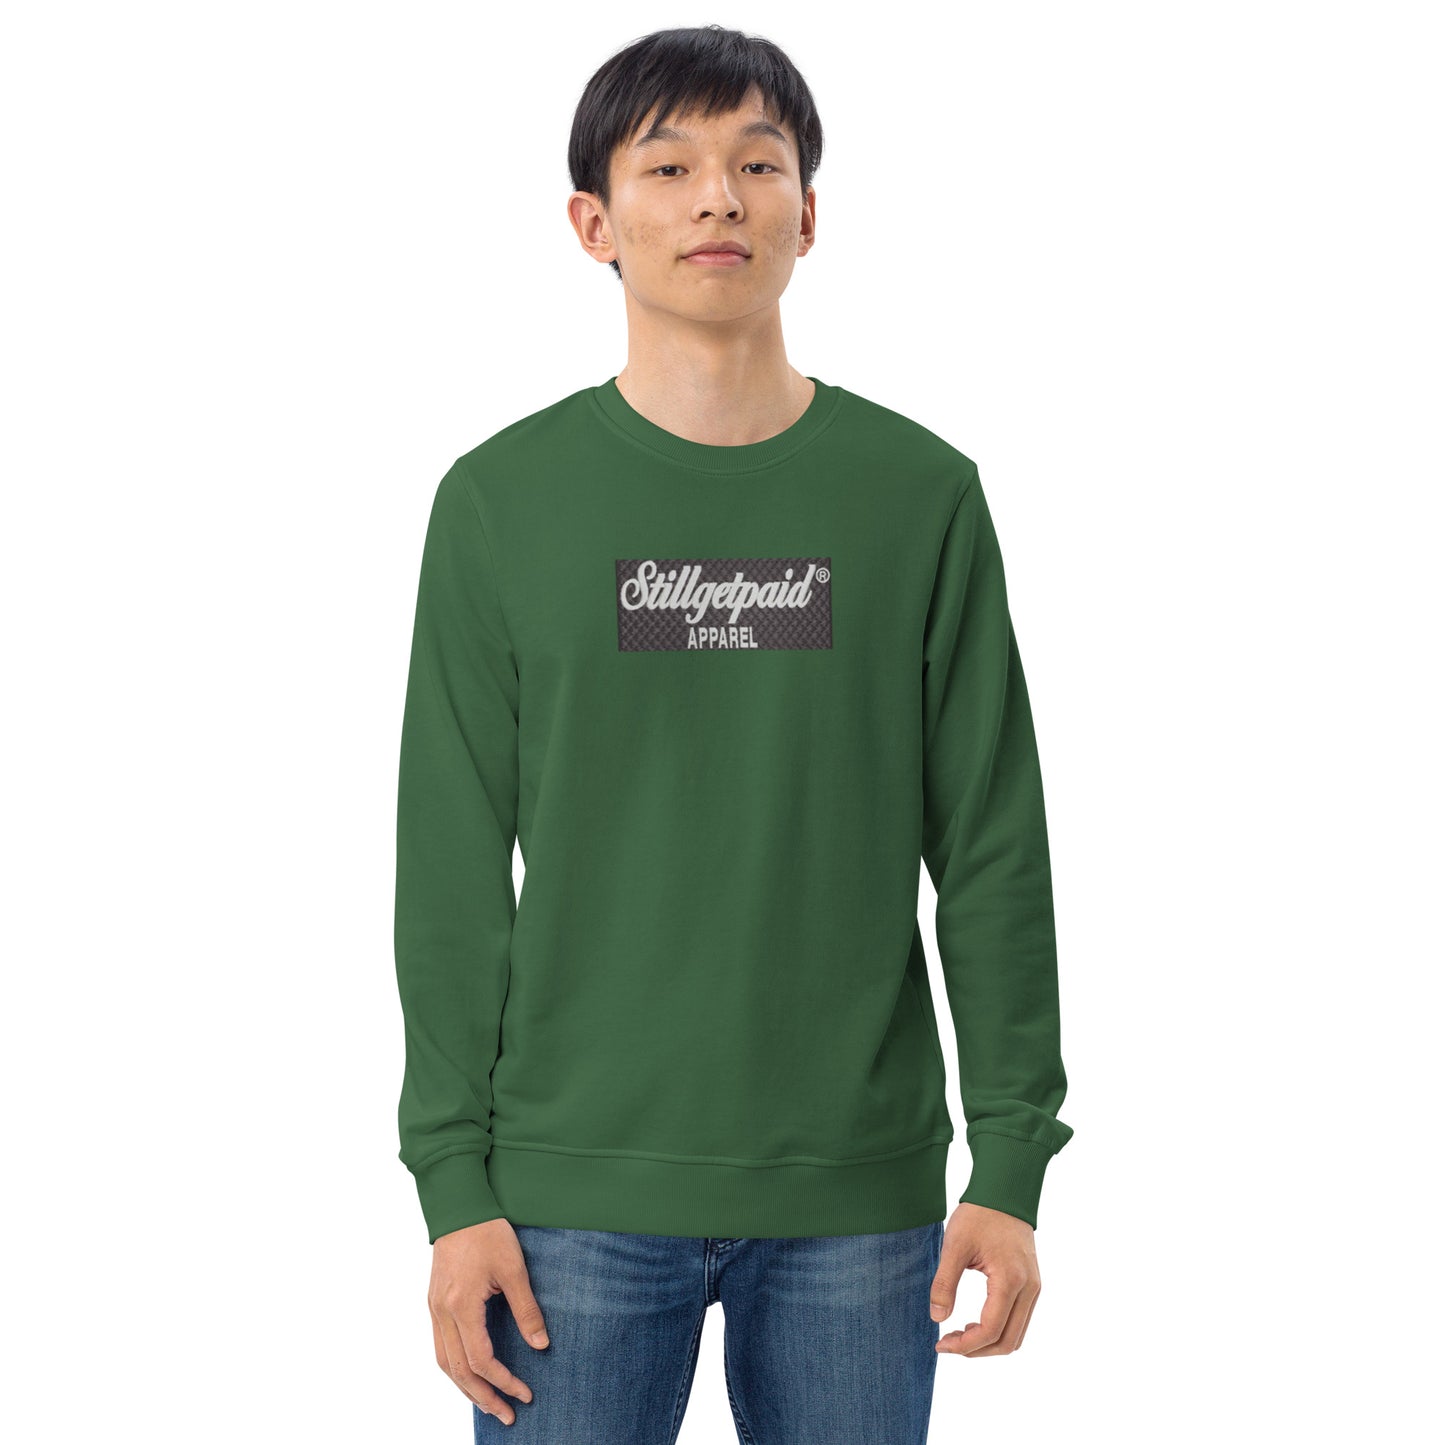 STILLGETPAID APPAREL Unisex organic sweatshirt